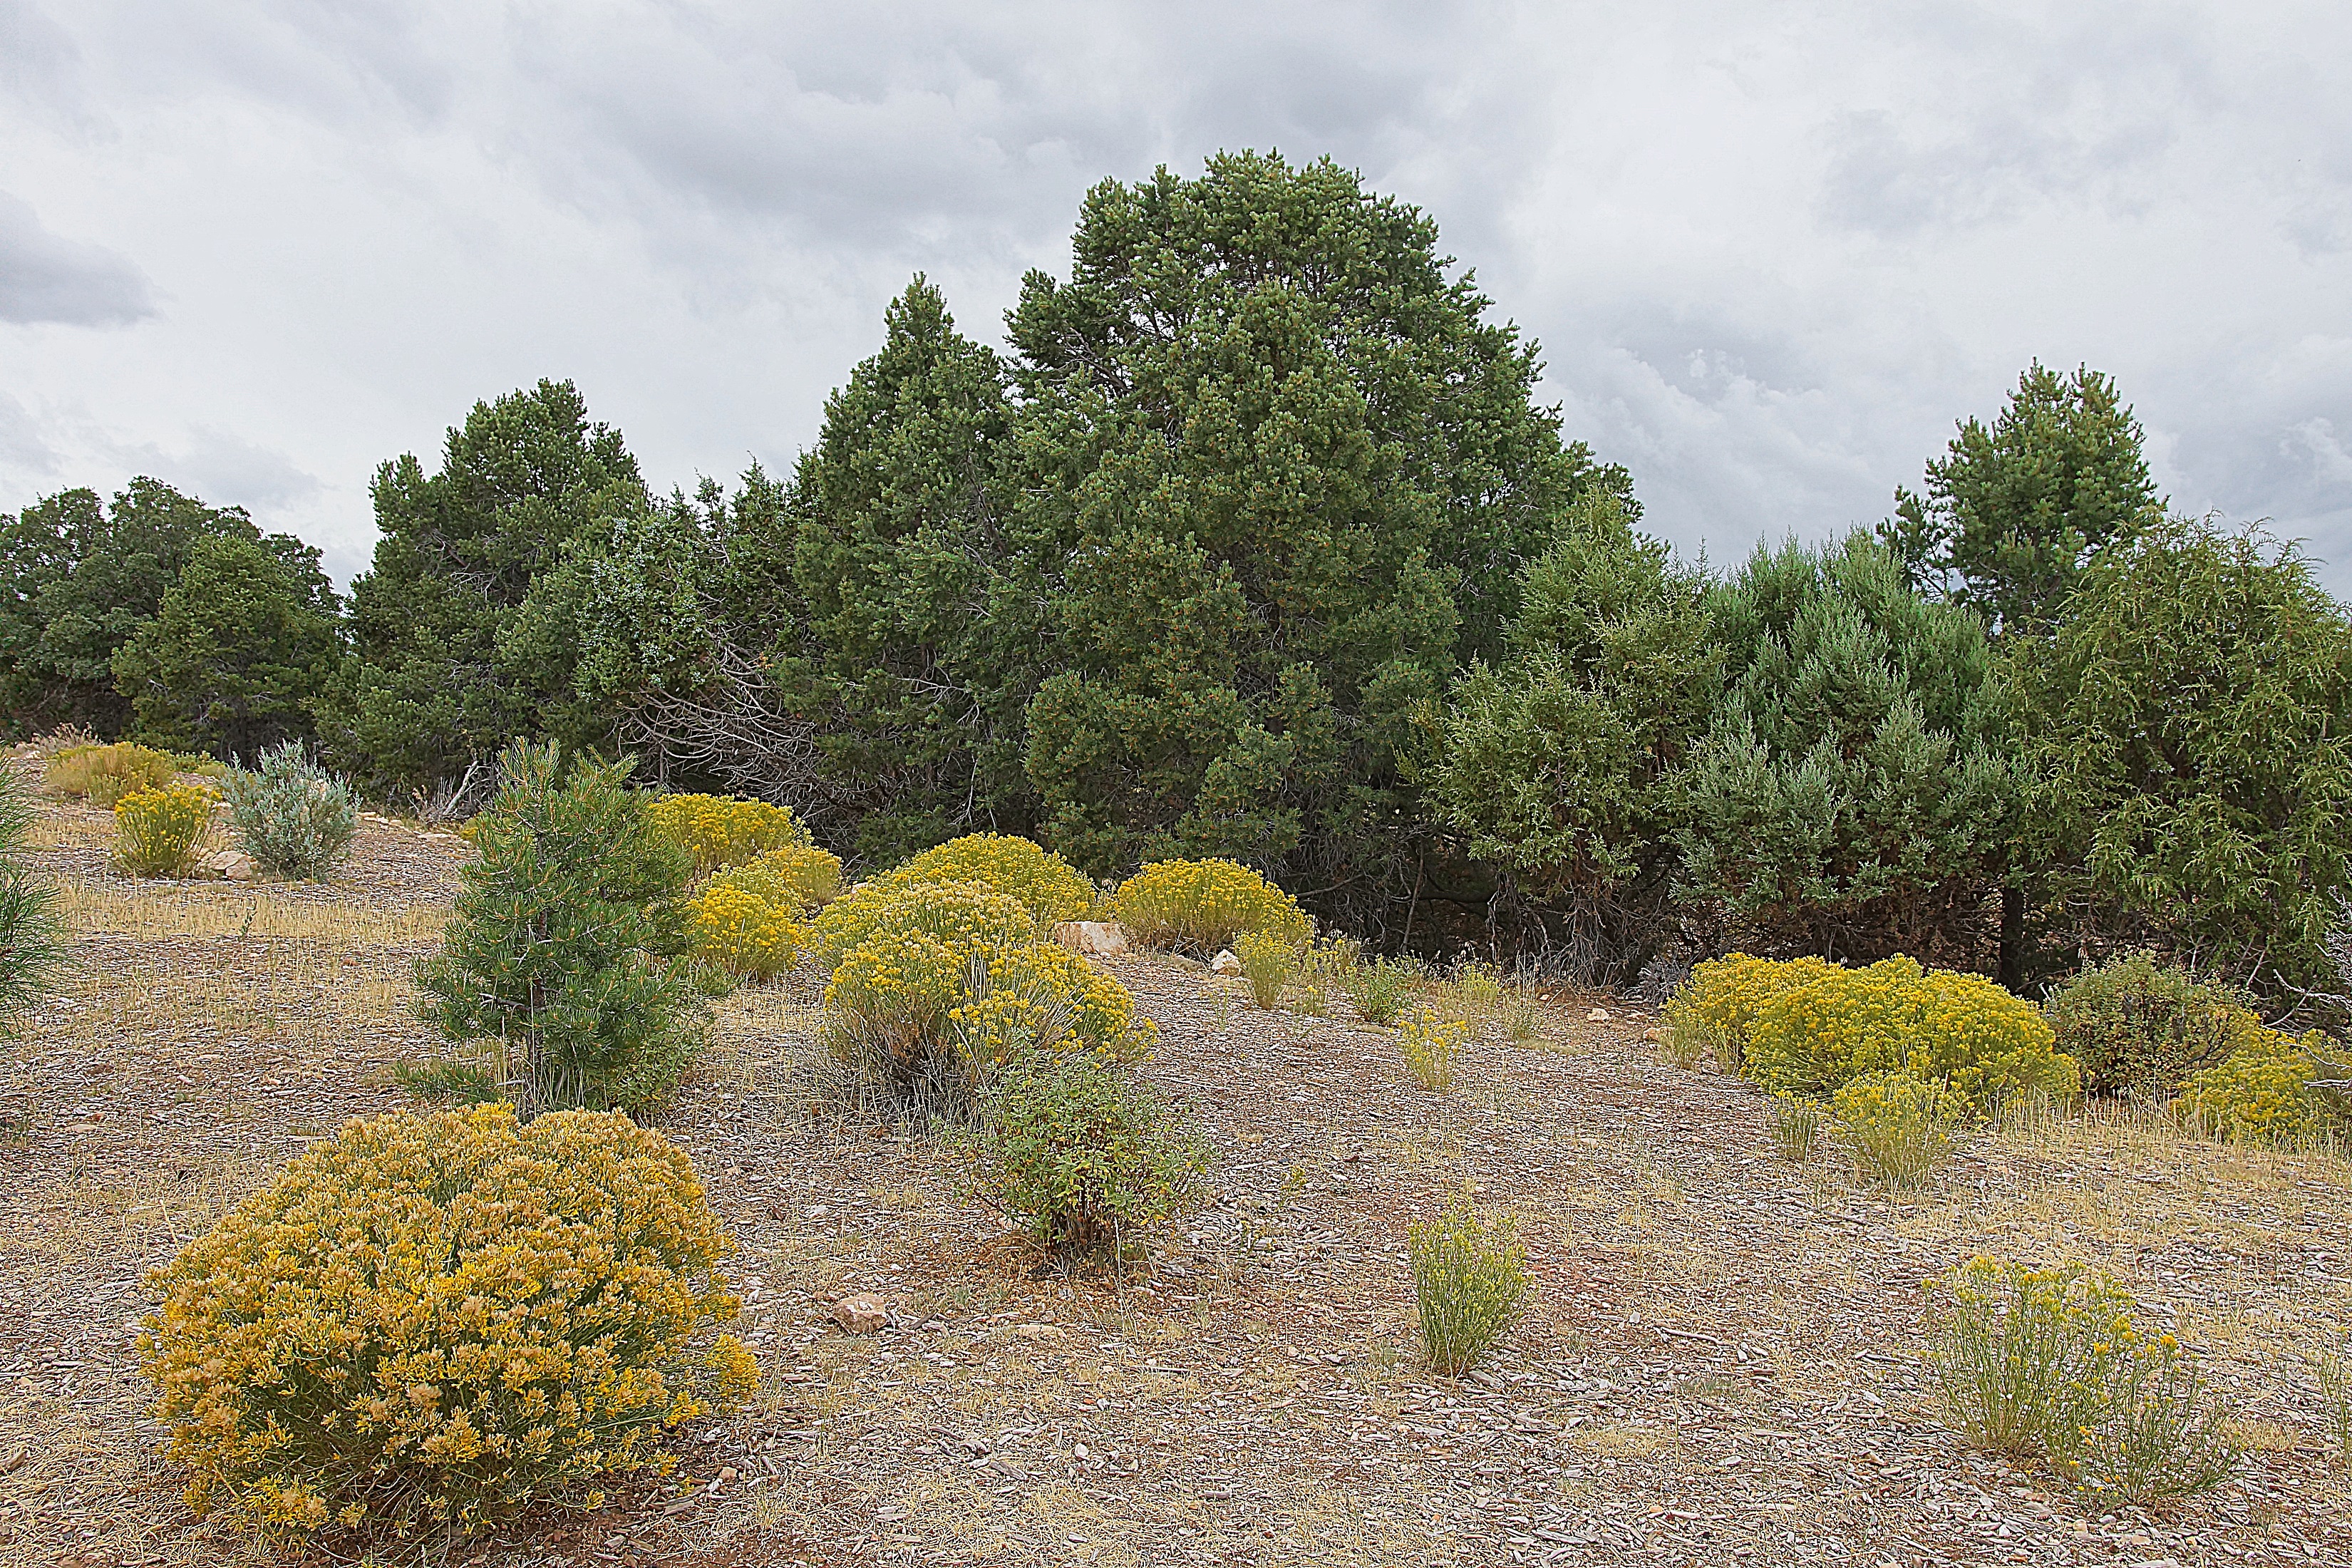 Опушка леса возле Гранд Каньона. Фото Морошкина В.В.